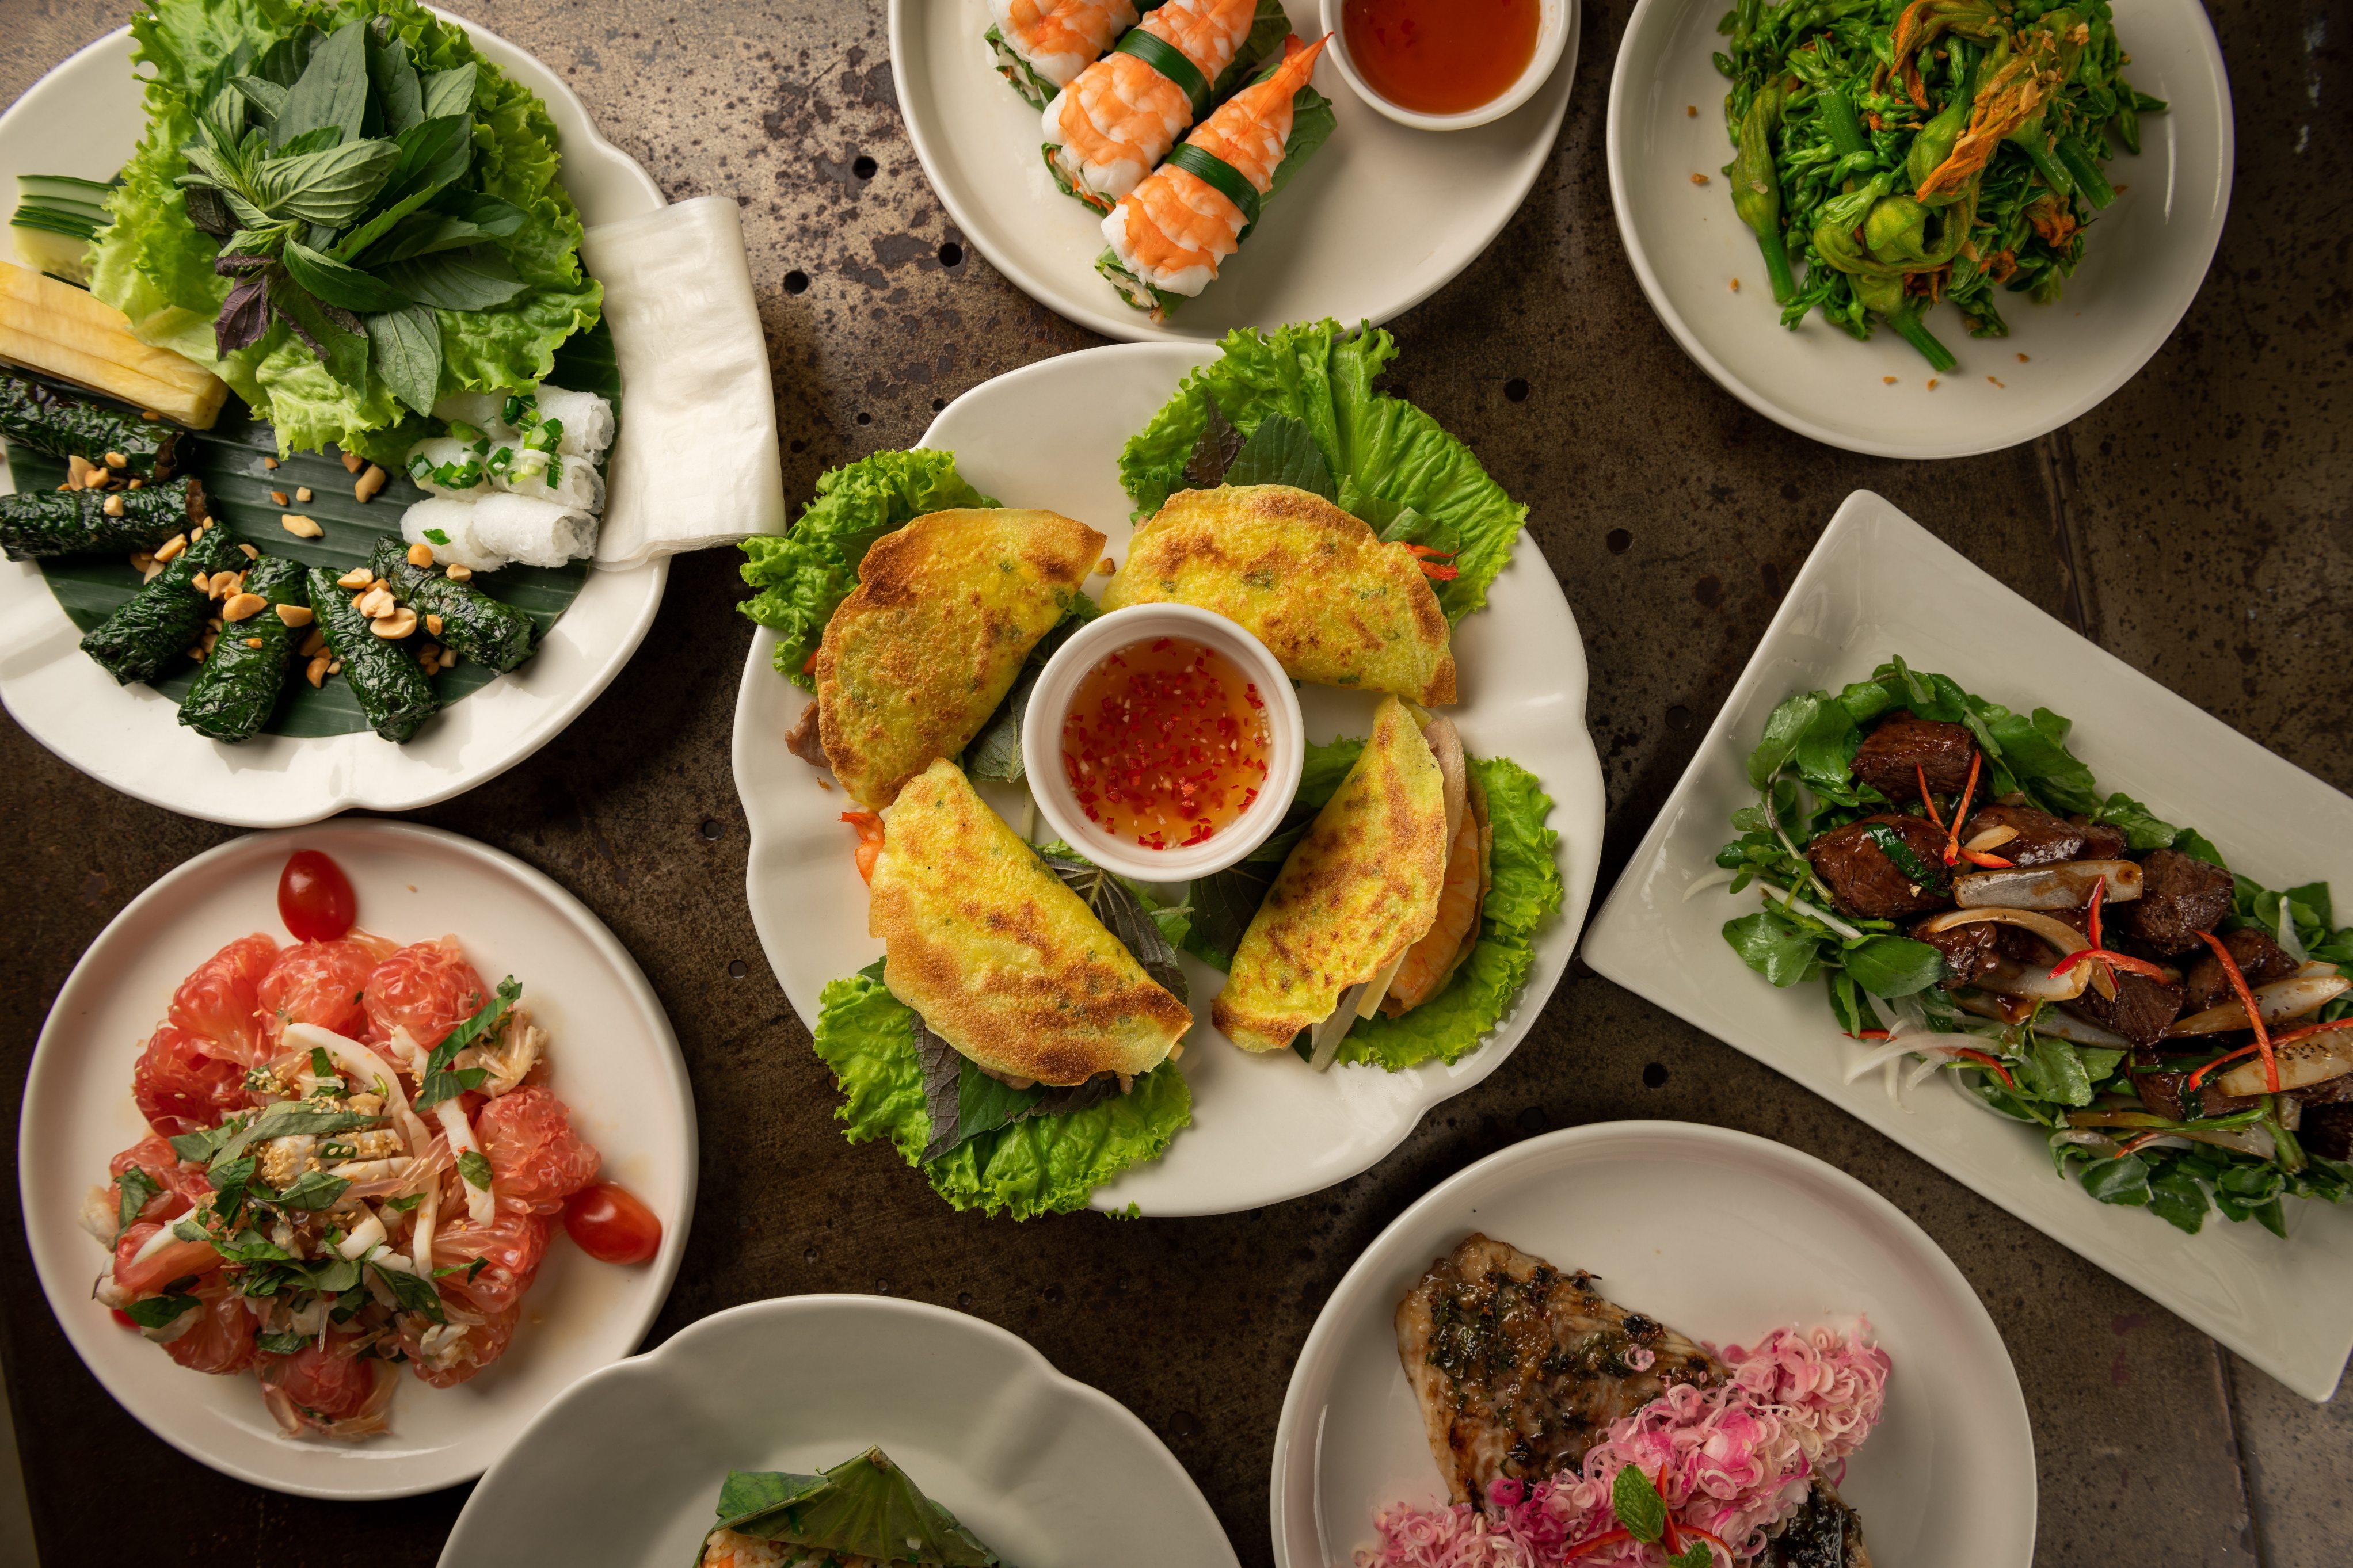 What to eat at Hoa Túc Restaurant